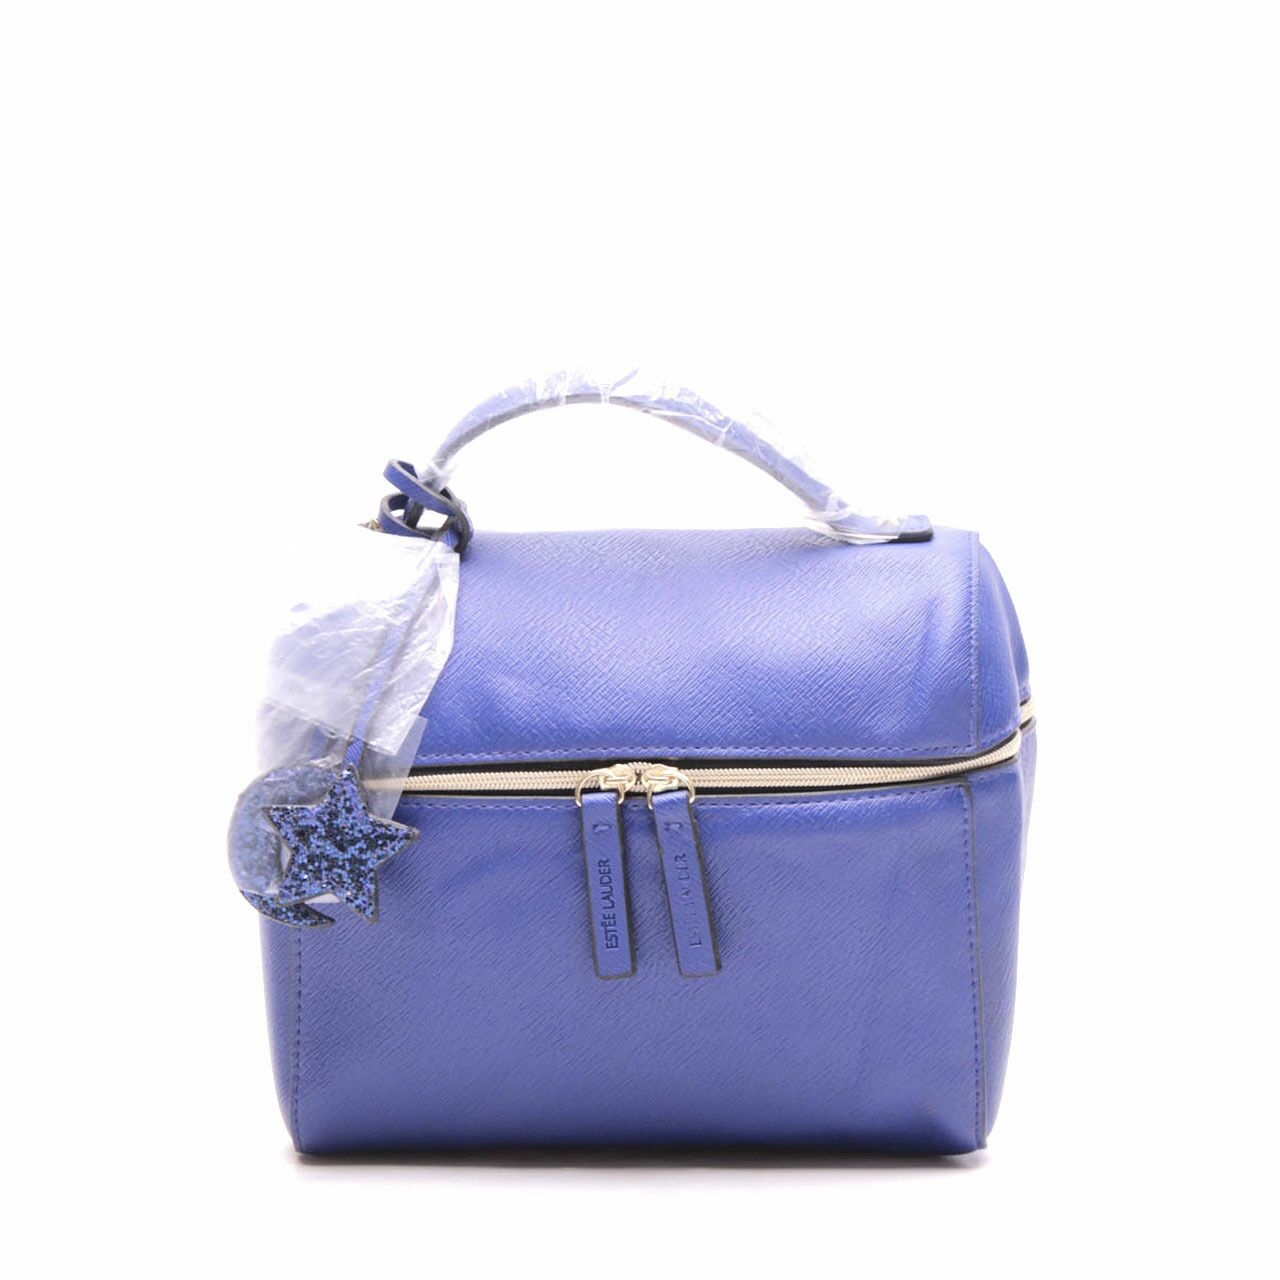 Estee Lauder Blue Handbag